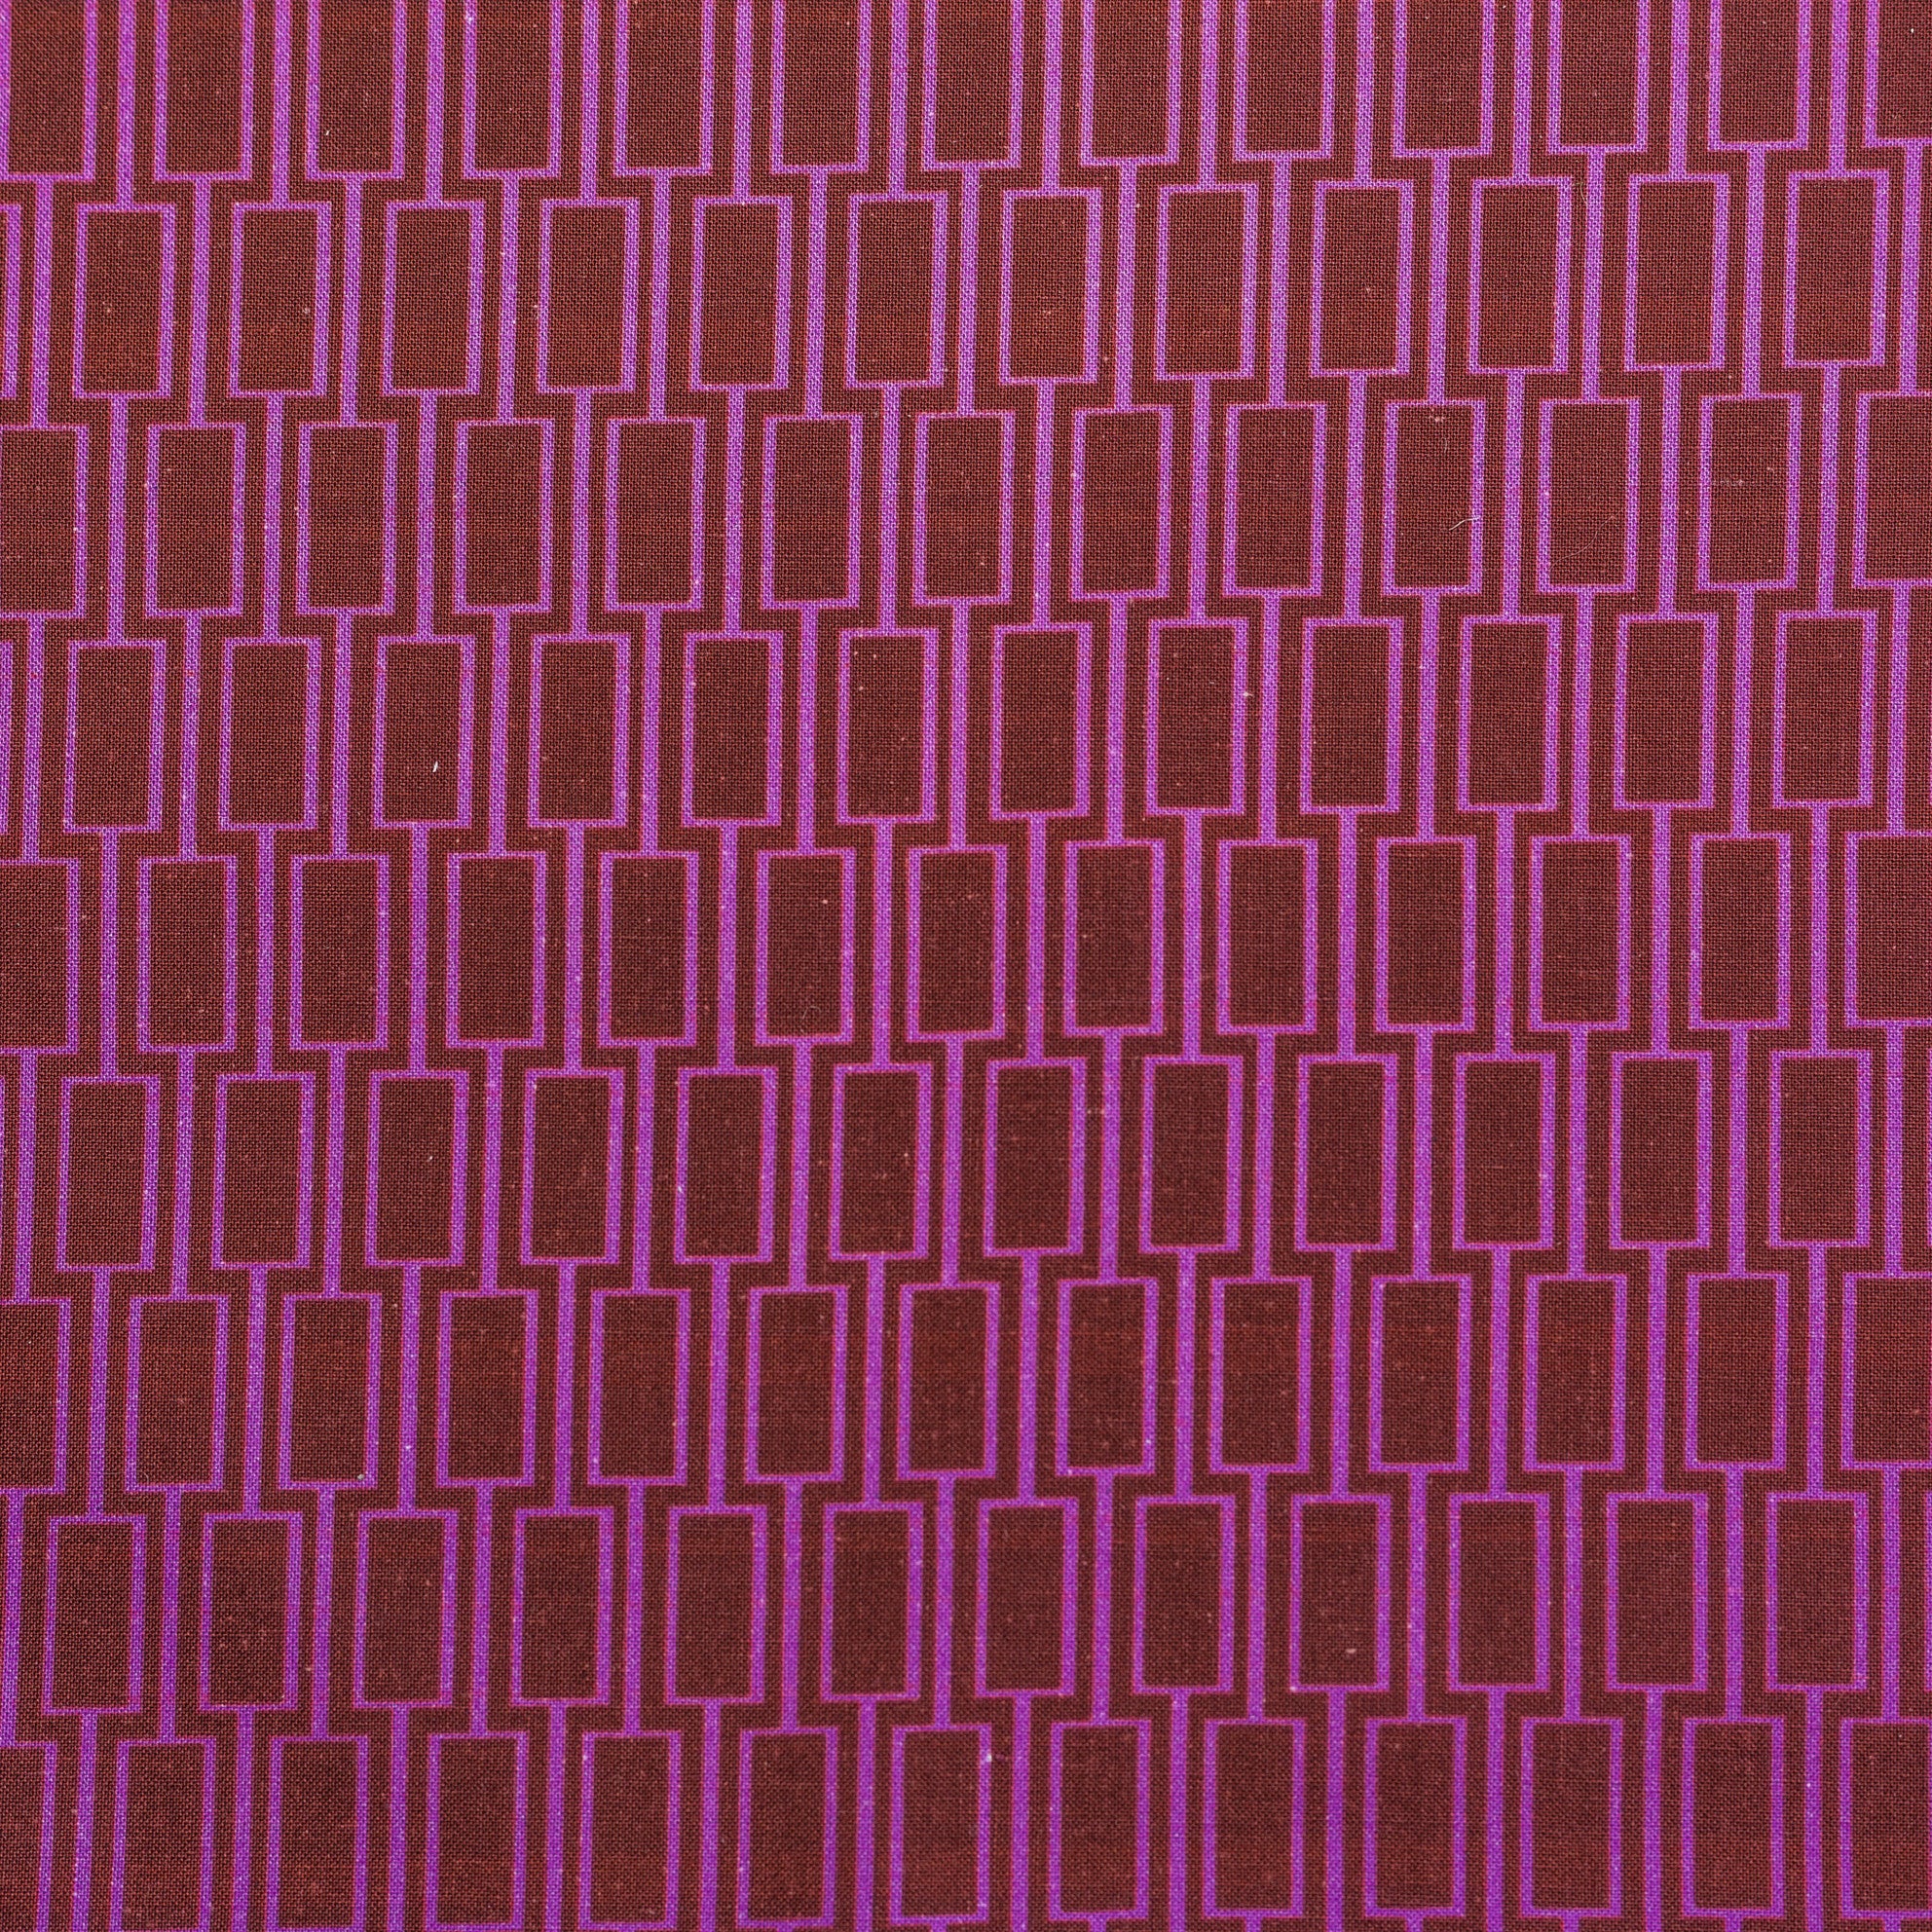 Geometric Print Fabric - Lattice P104/211 Seaweed Bronze/Lilac Time